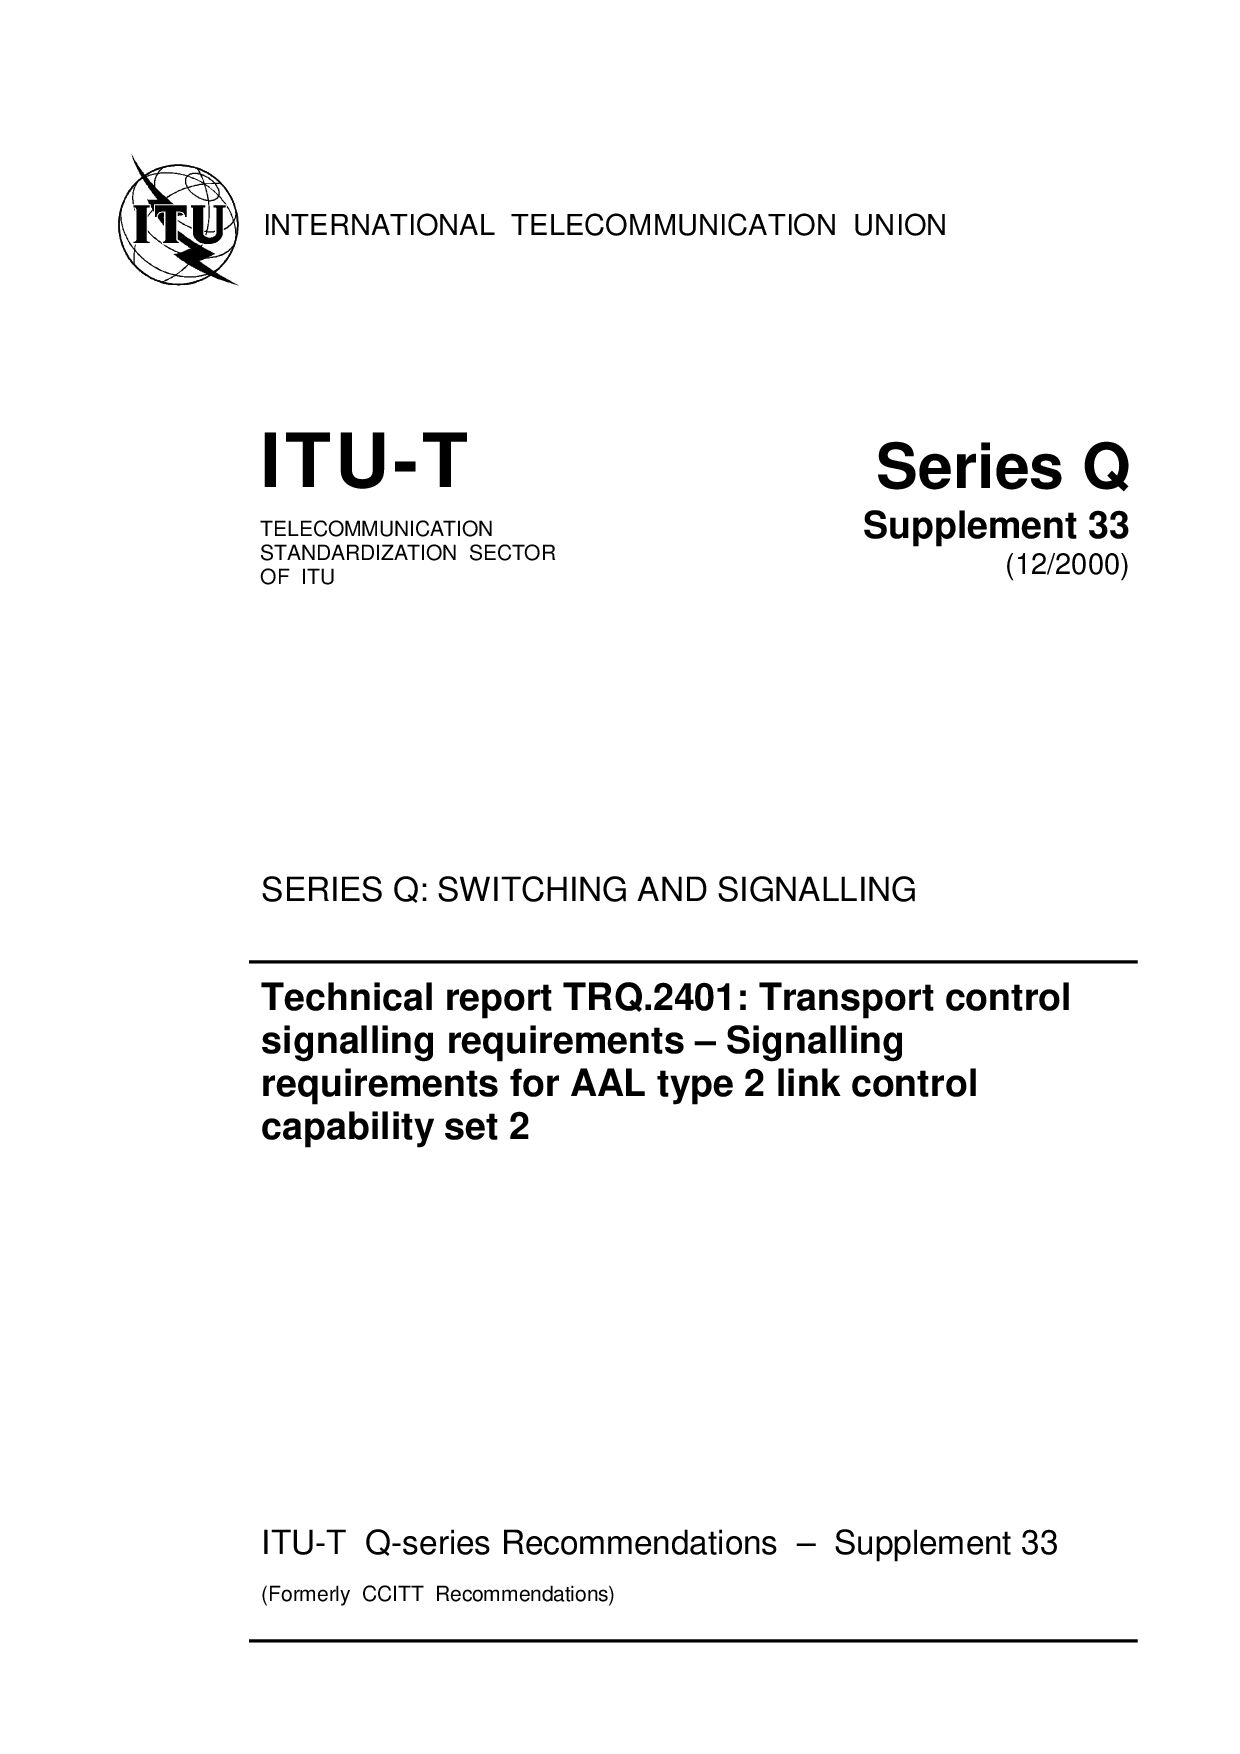 ITU-T SERIES Q SUPP 33-2000